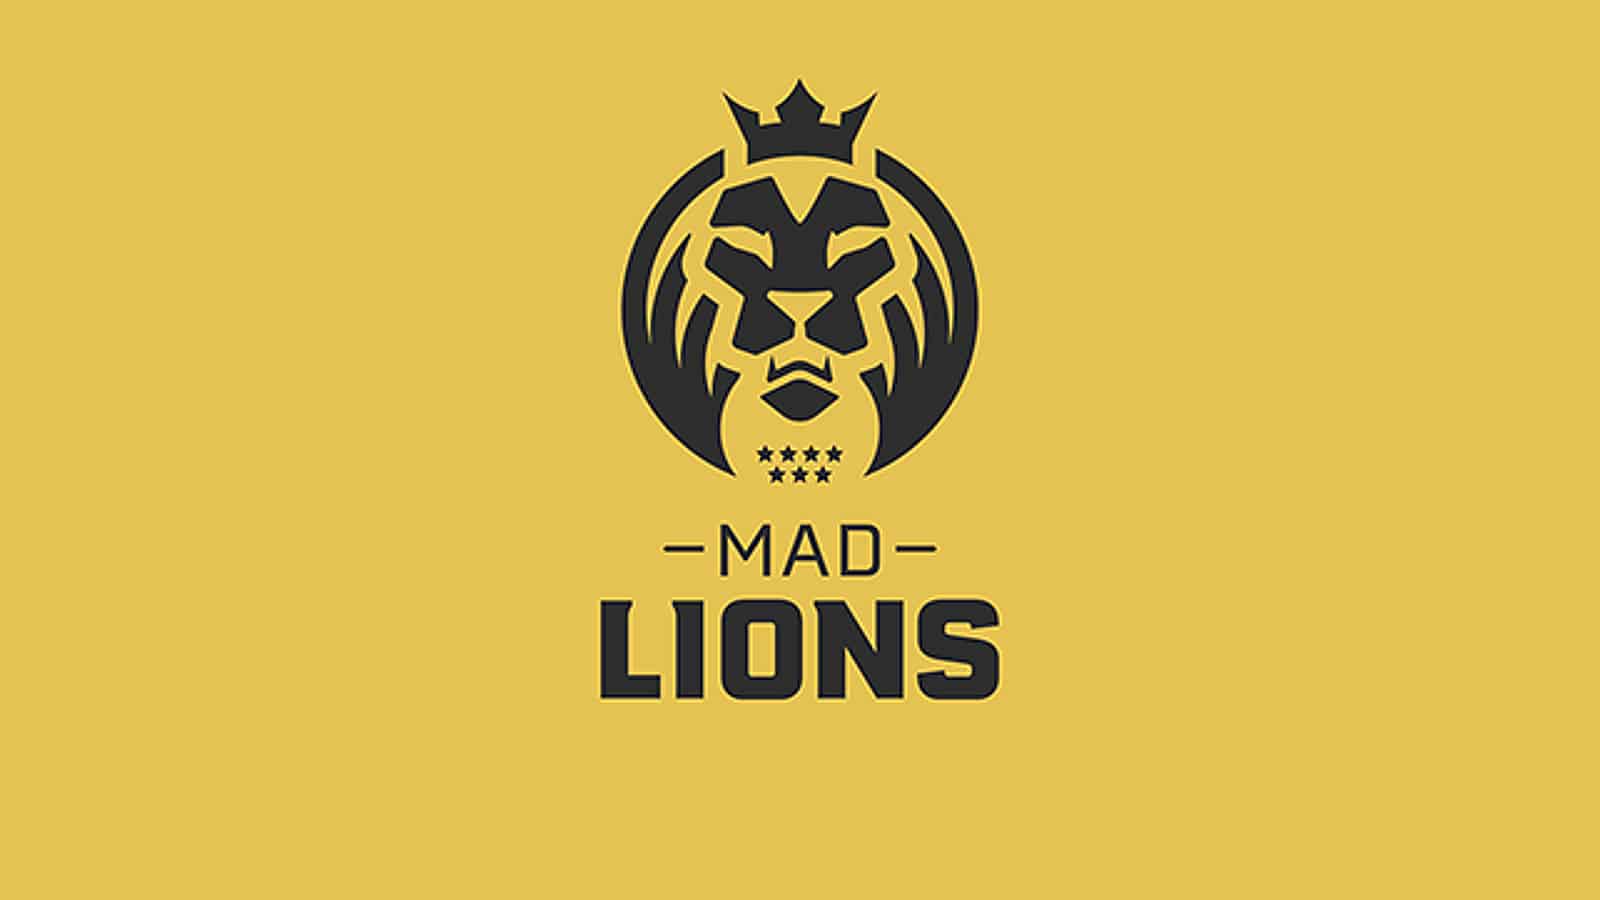 MAD Lions logo in valorant